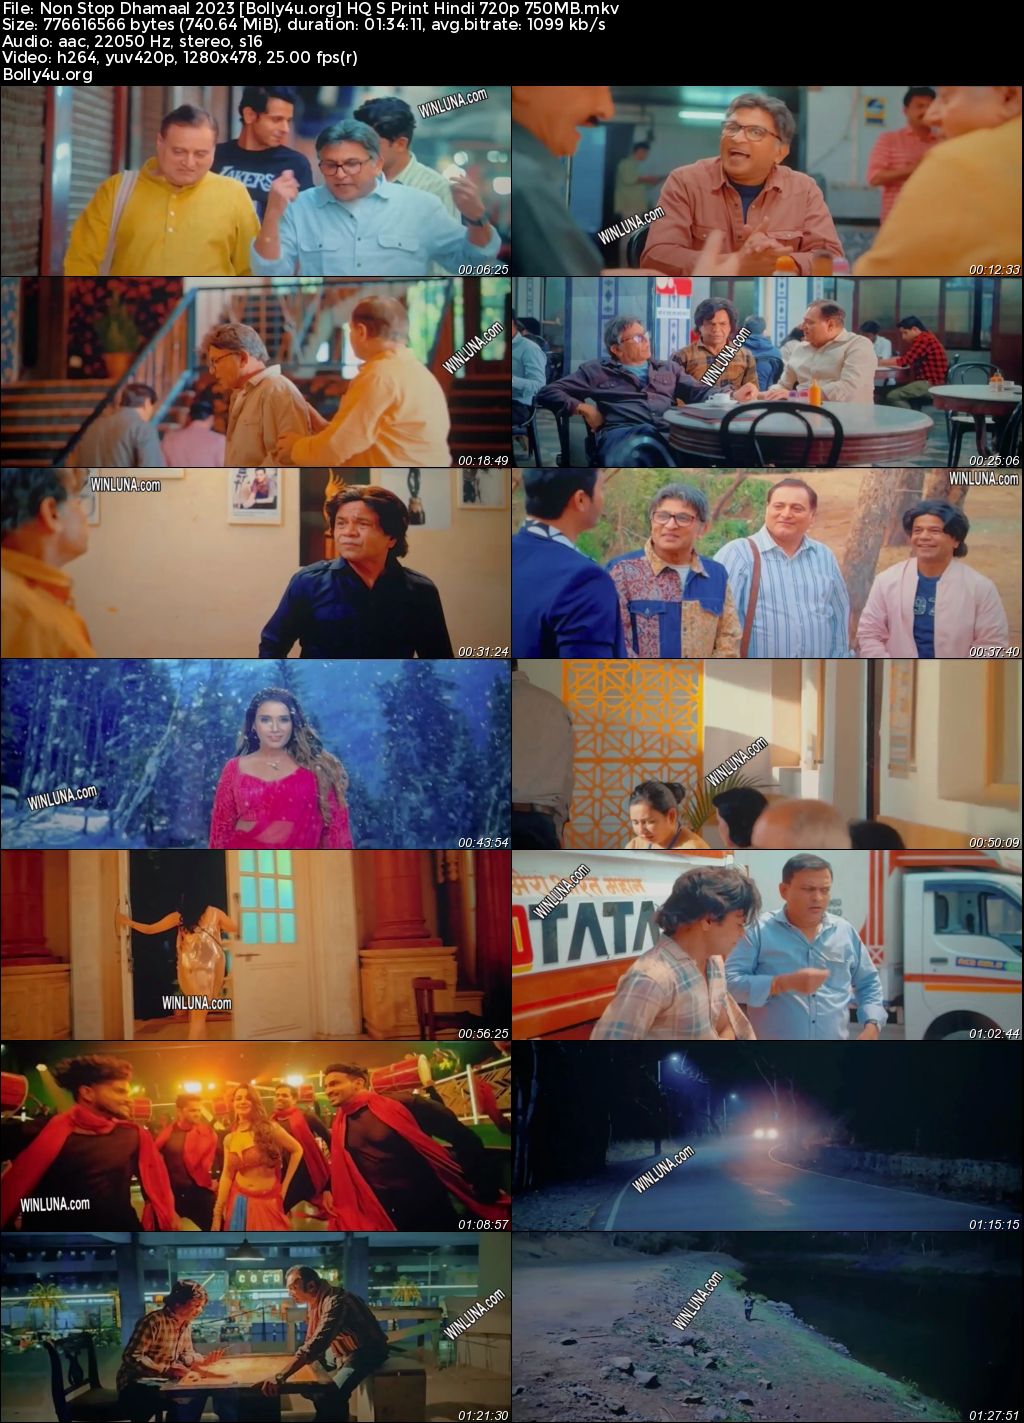 Non Stop Dhamaal 2023 HQ S Print Hindi Full Movie Download 1080p 720p ...